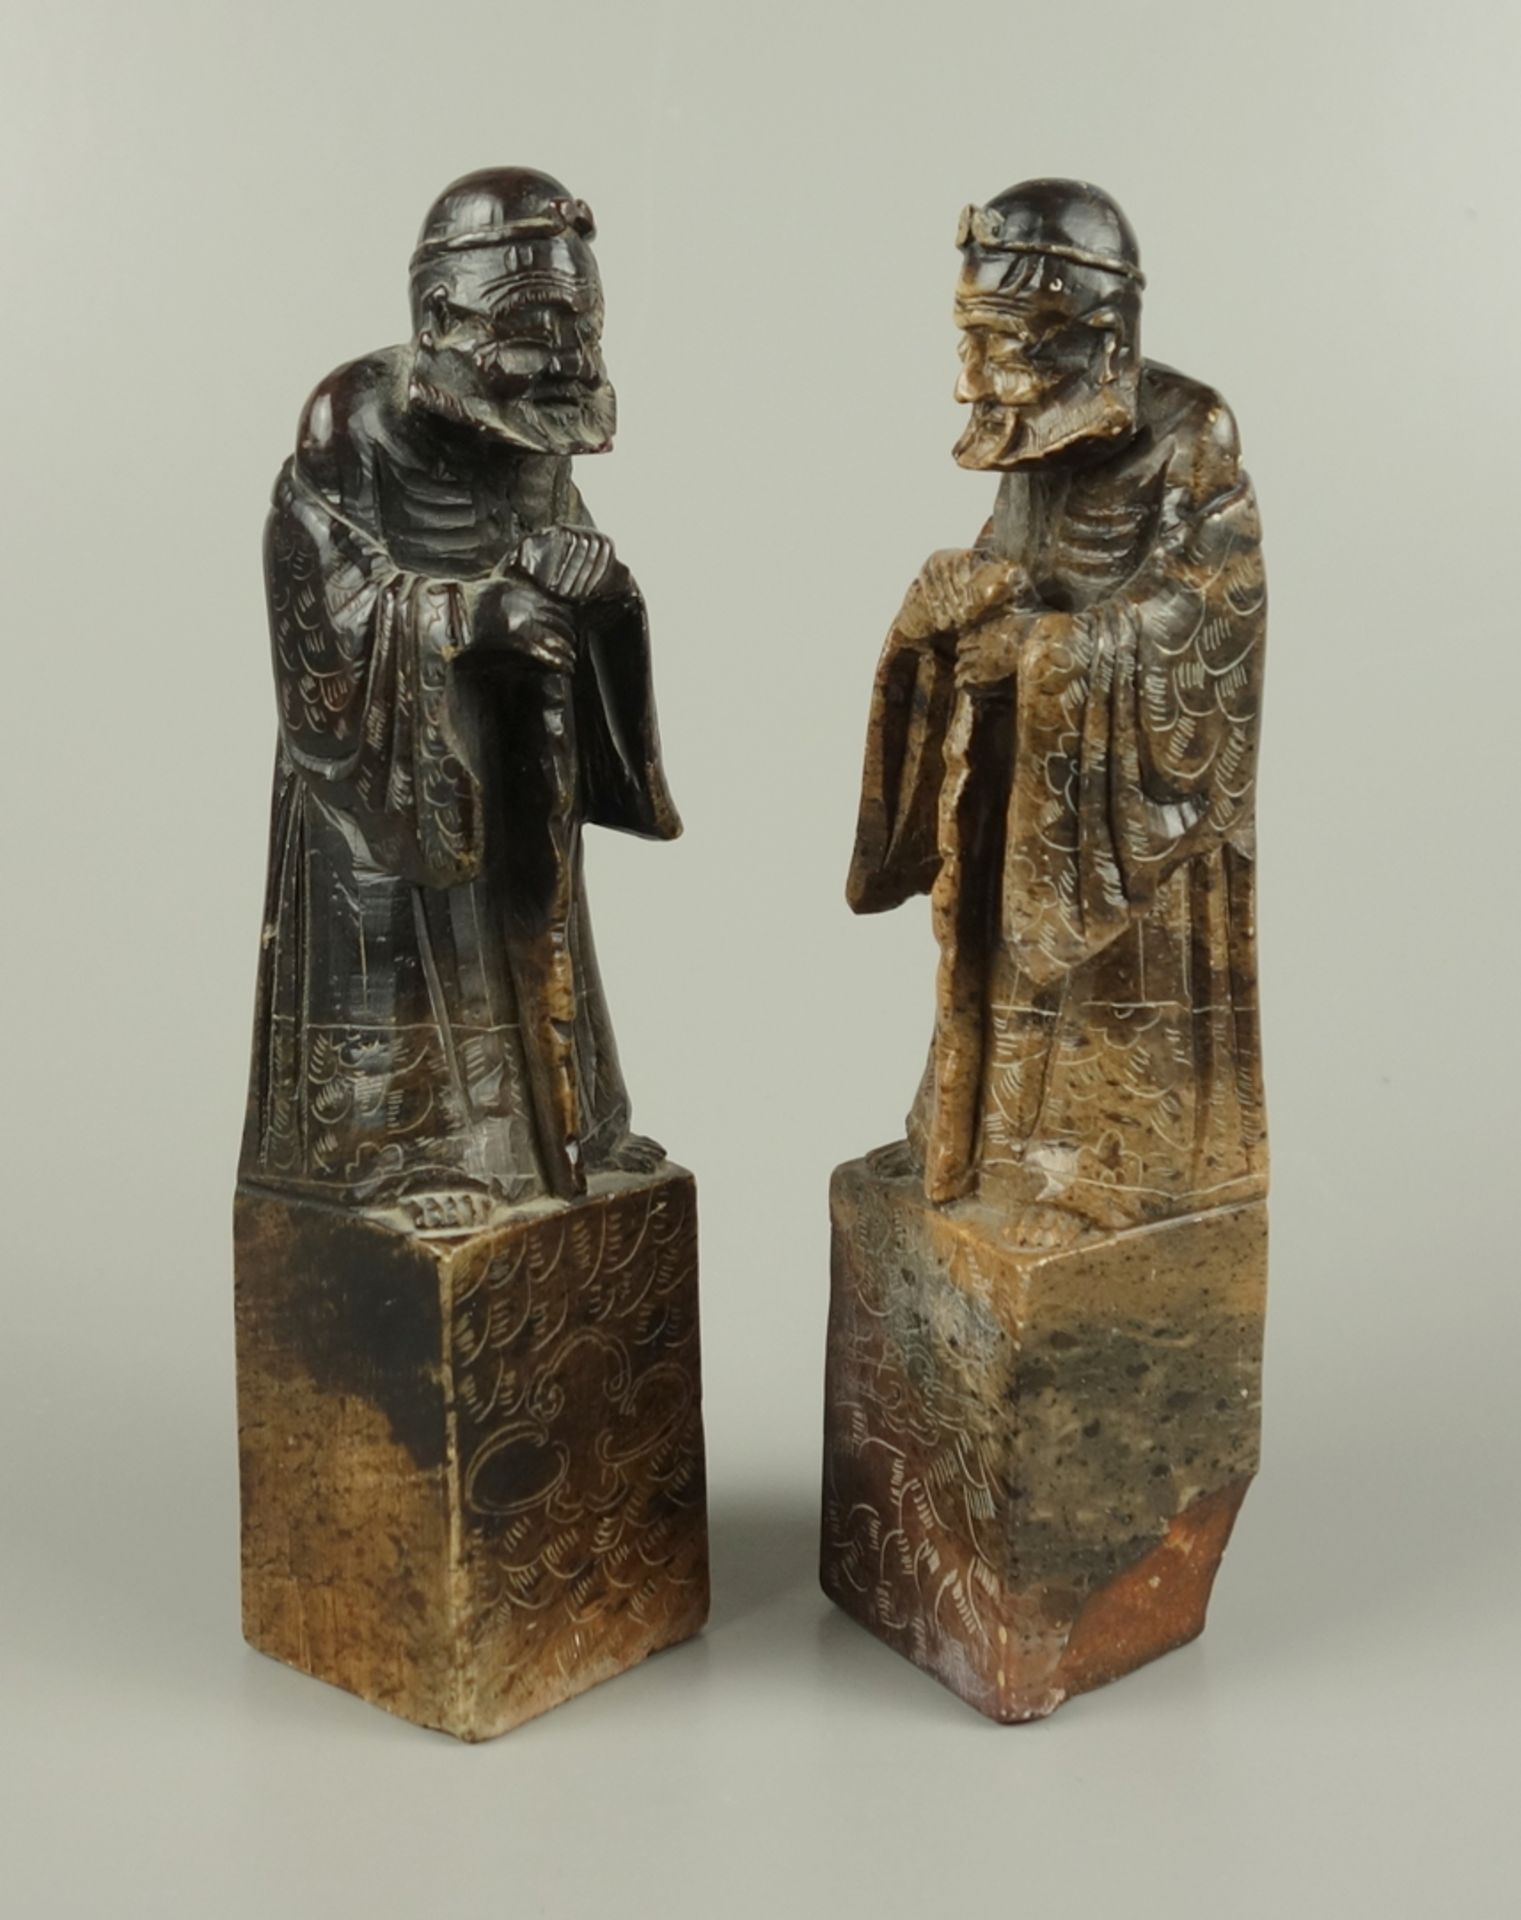 2 scholar figures, China, mid-20th century - Image 2 of 4